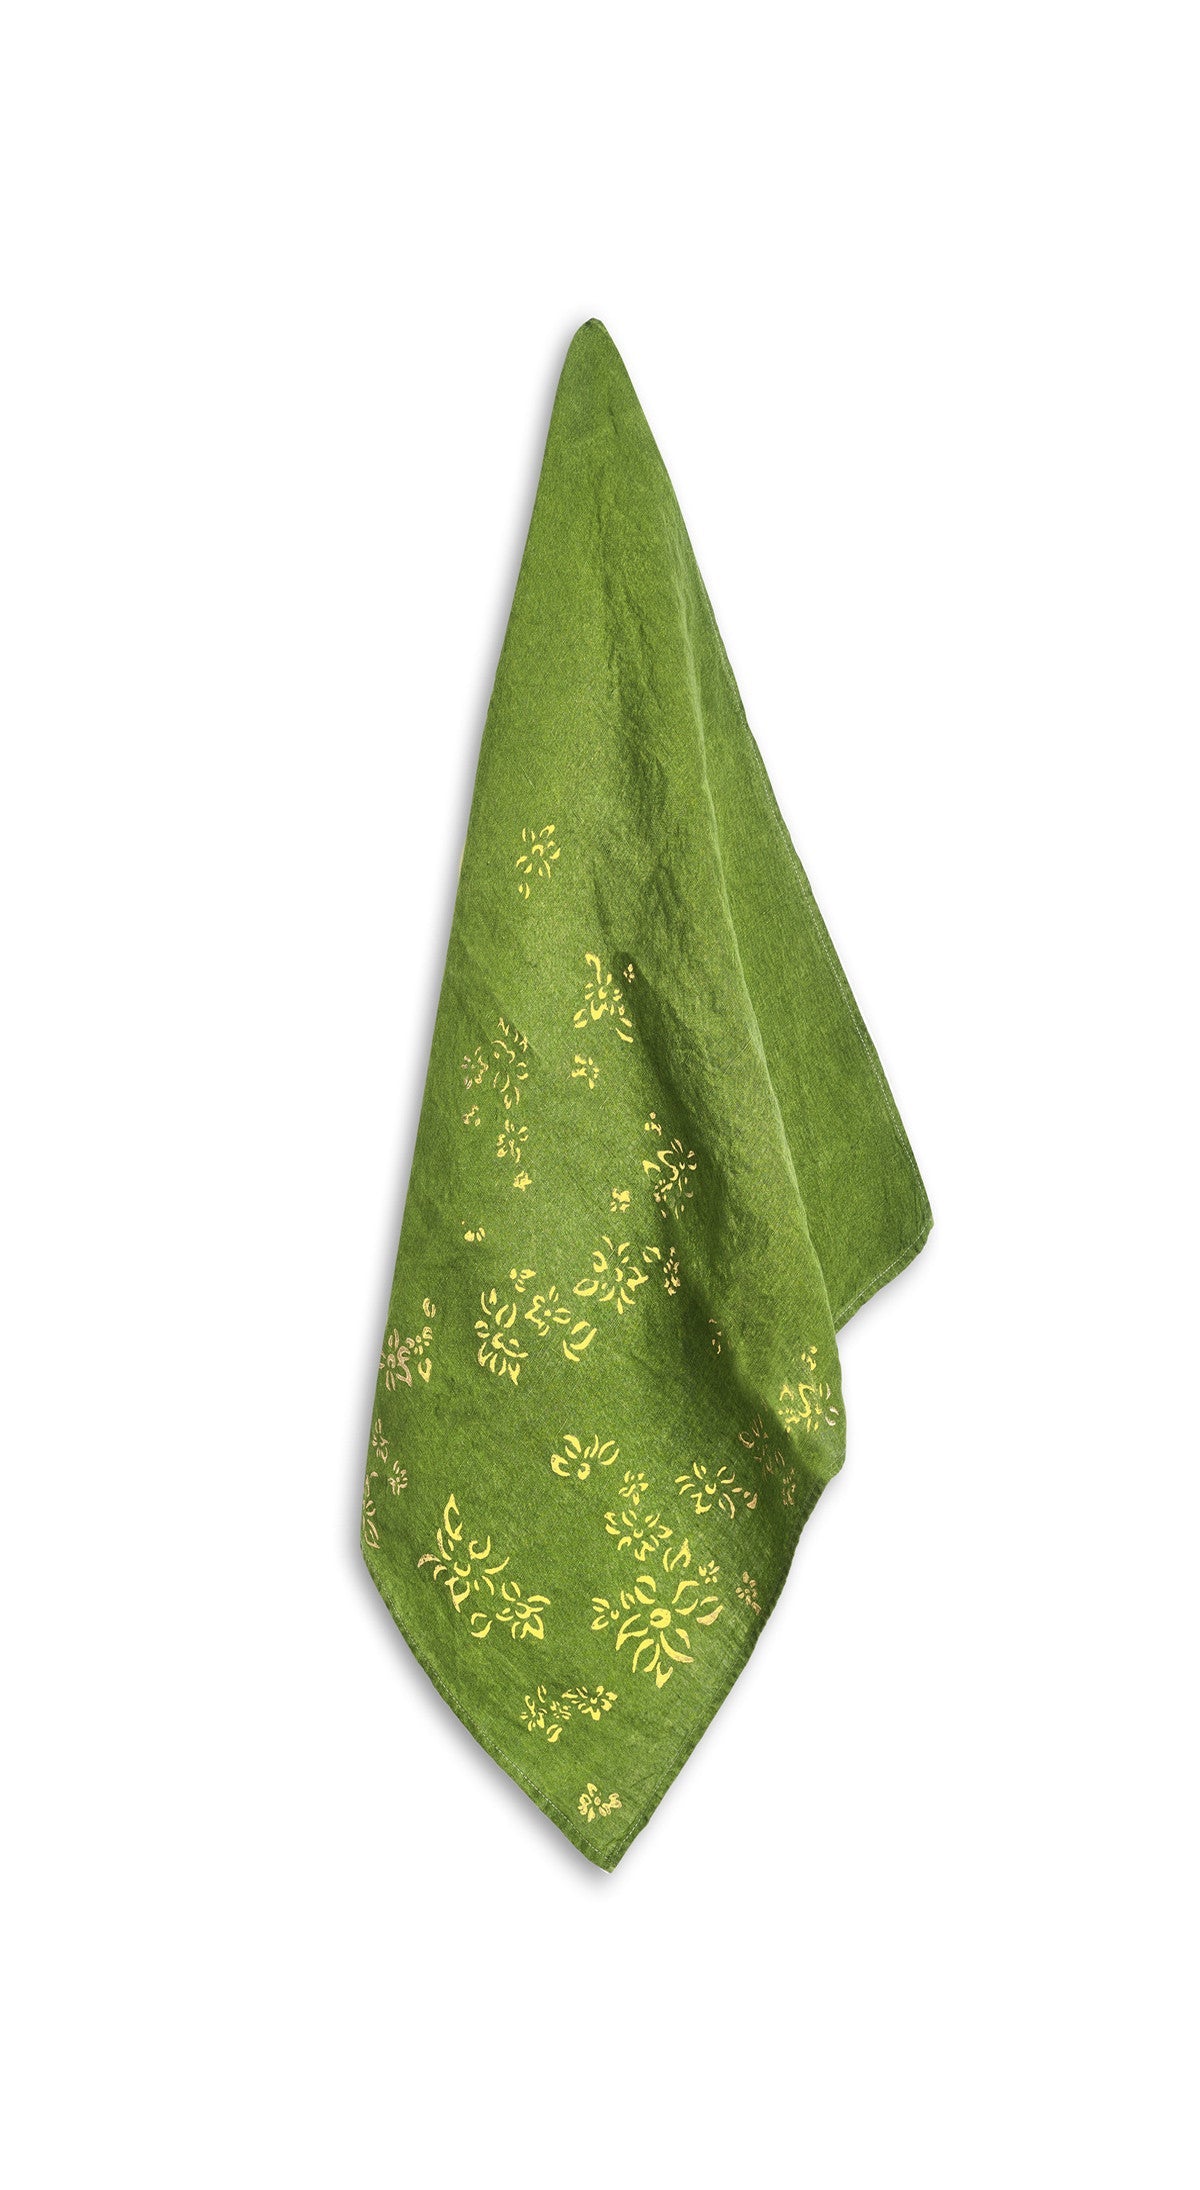 Bernadette's Hand Stamped Falling Flower On Full Field Linen Napkin in Avocado Green & Gold, 50x50cm